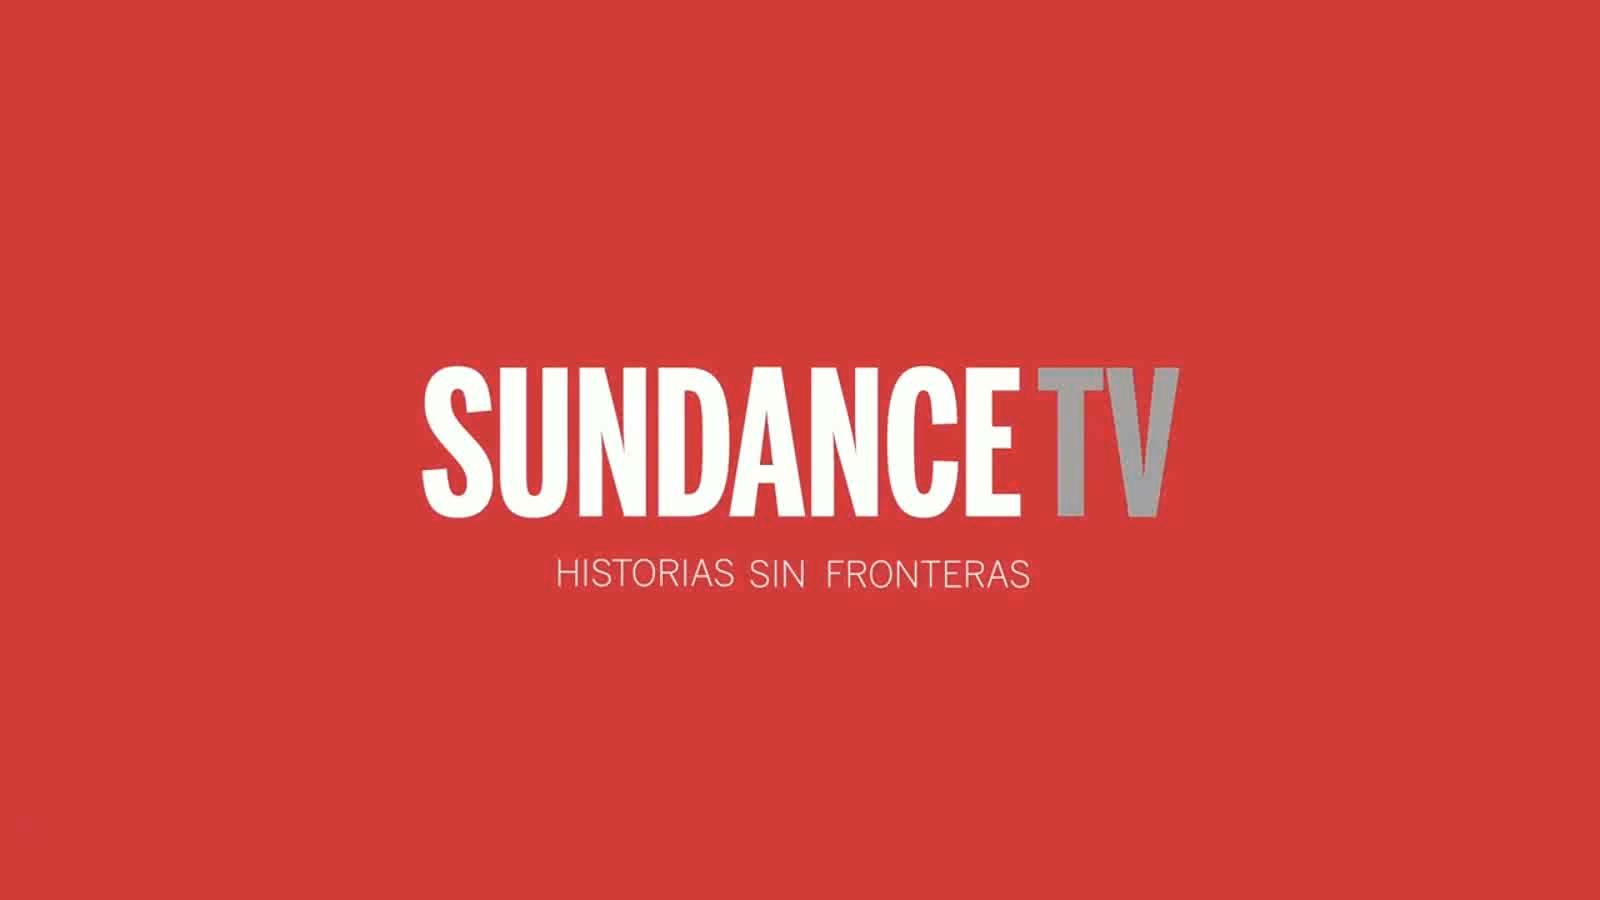 sundance tv es 6.png